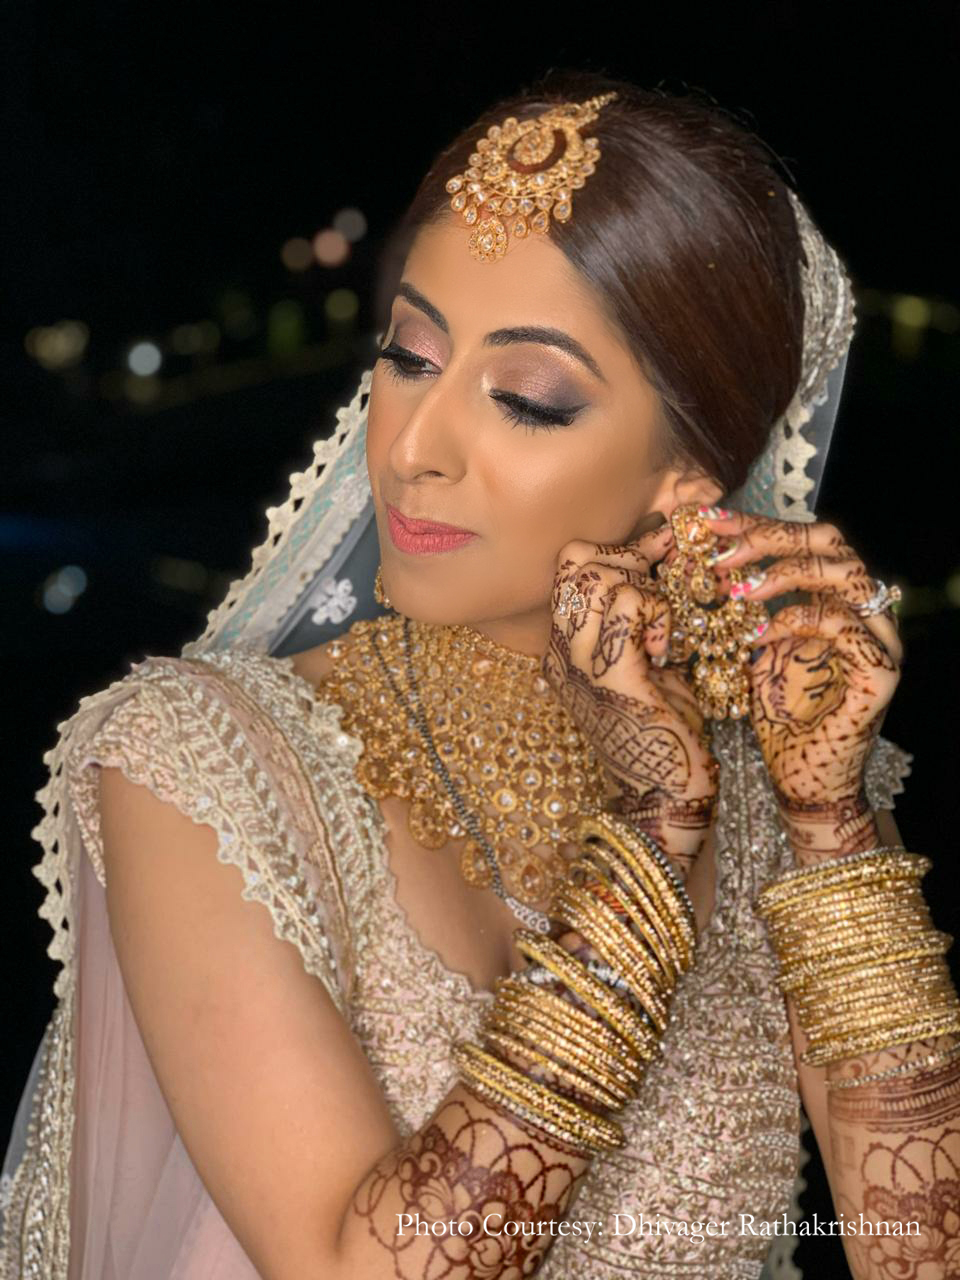 Bride wearing Blush lehenga with golden jewelry